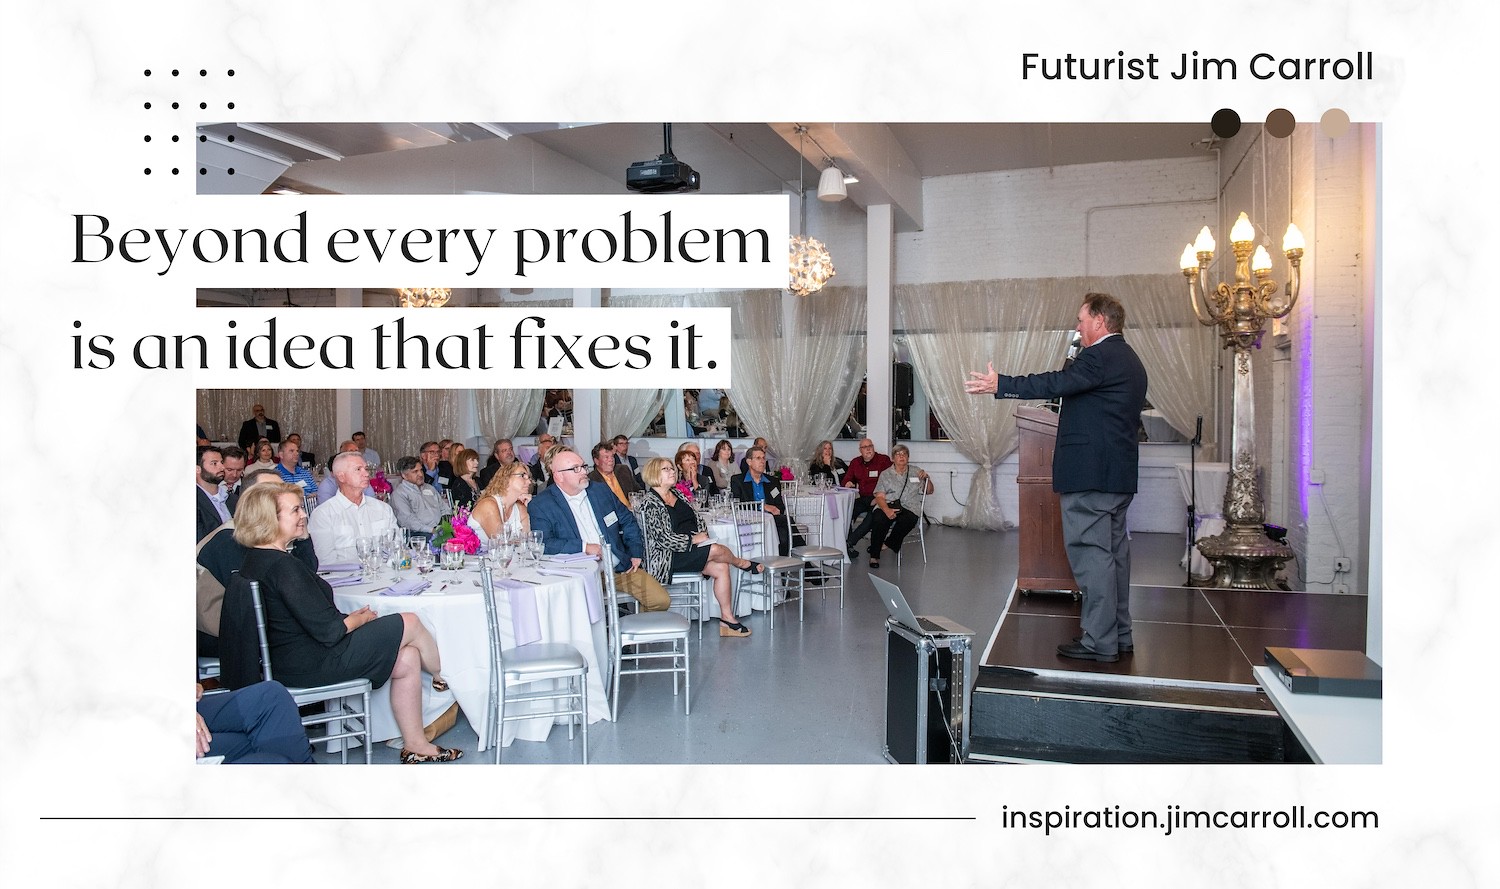 "Beyond every problem is an idea that fixes it." - Futurist Jim Carroll